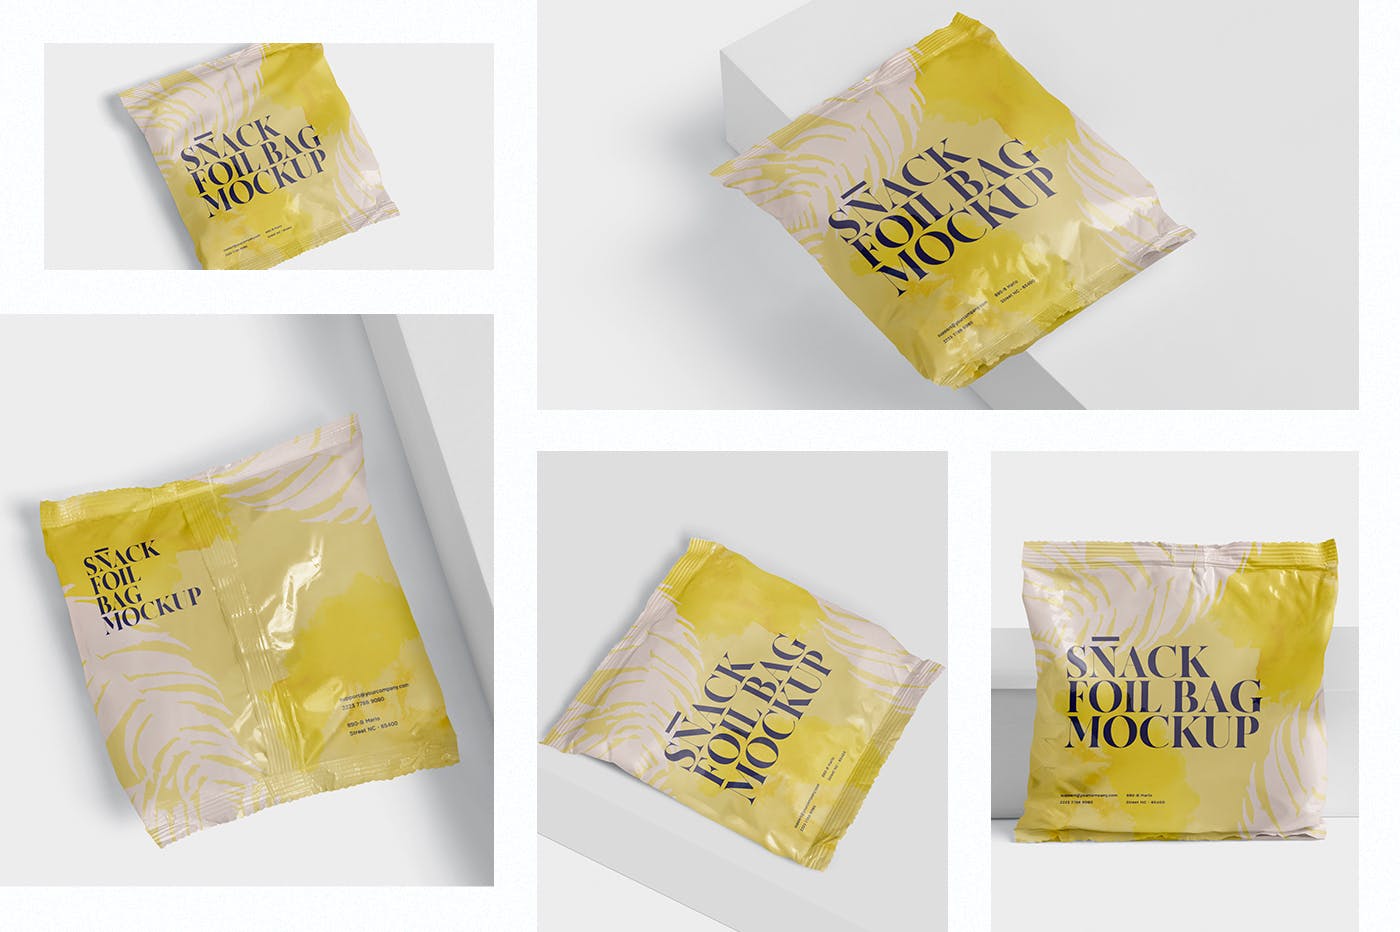 小吃零食铝箔包装袋设计图第一素材精选 Snack Foil Bag Mockup – Square Size – Small插图(1)